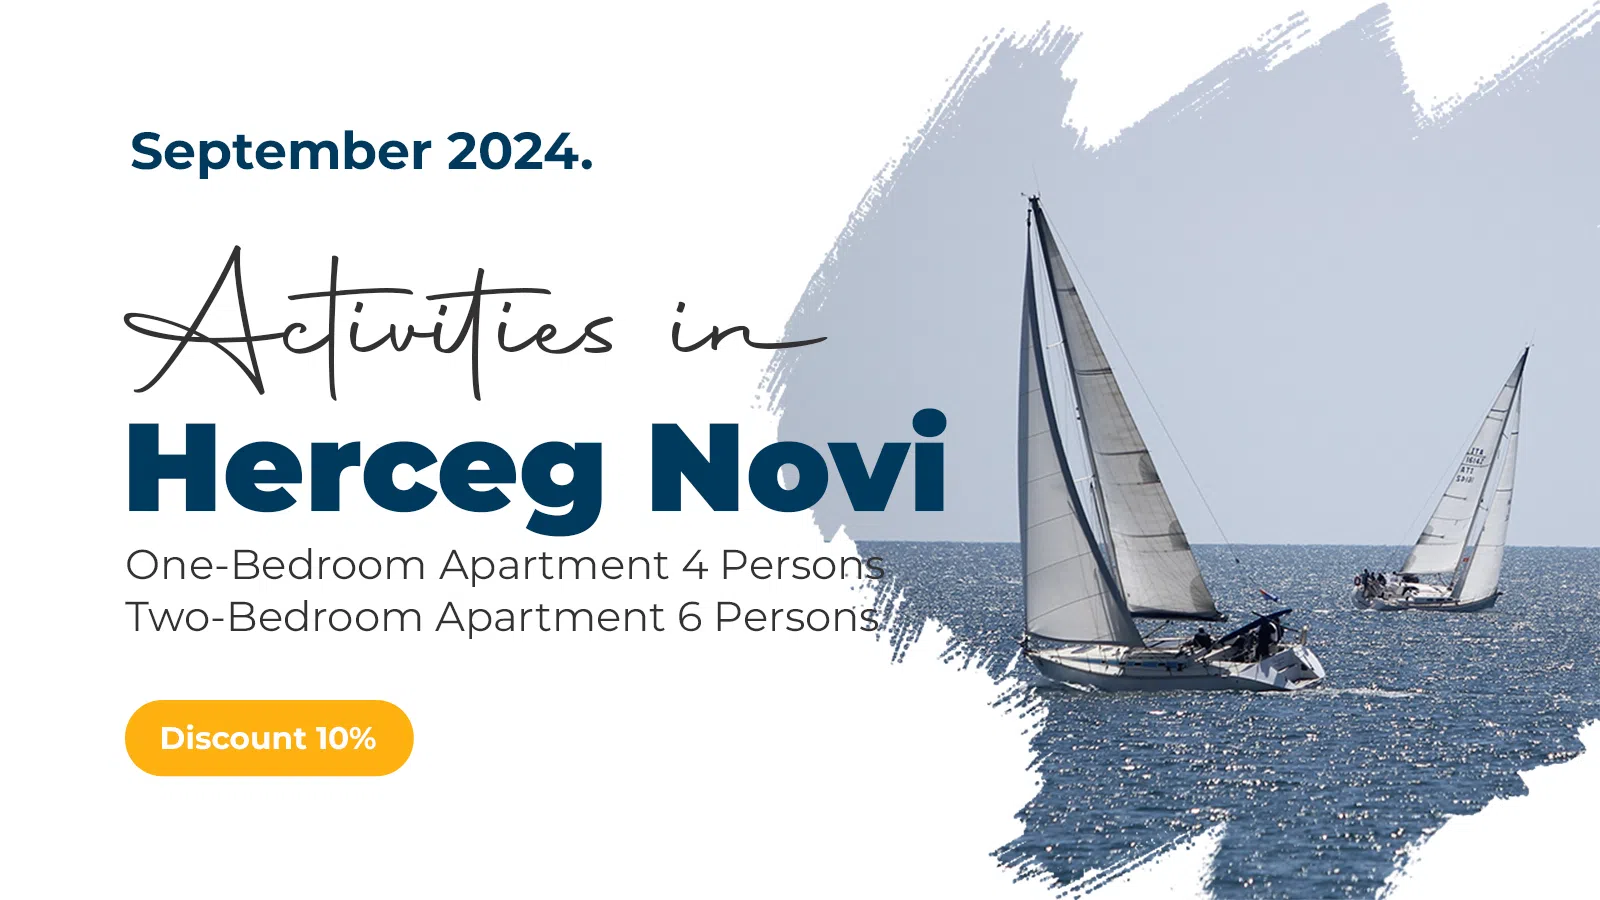 Holiday in Herceg Novi - September  2024.